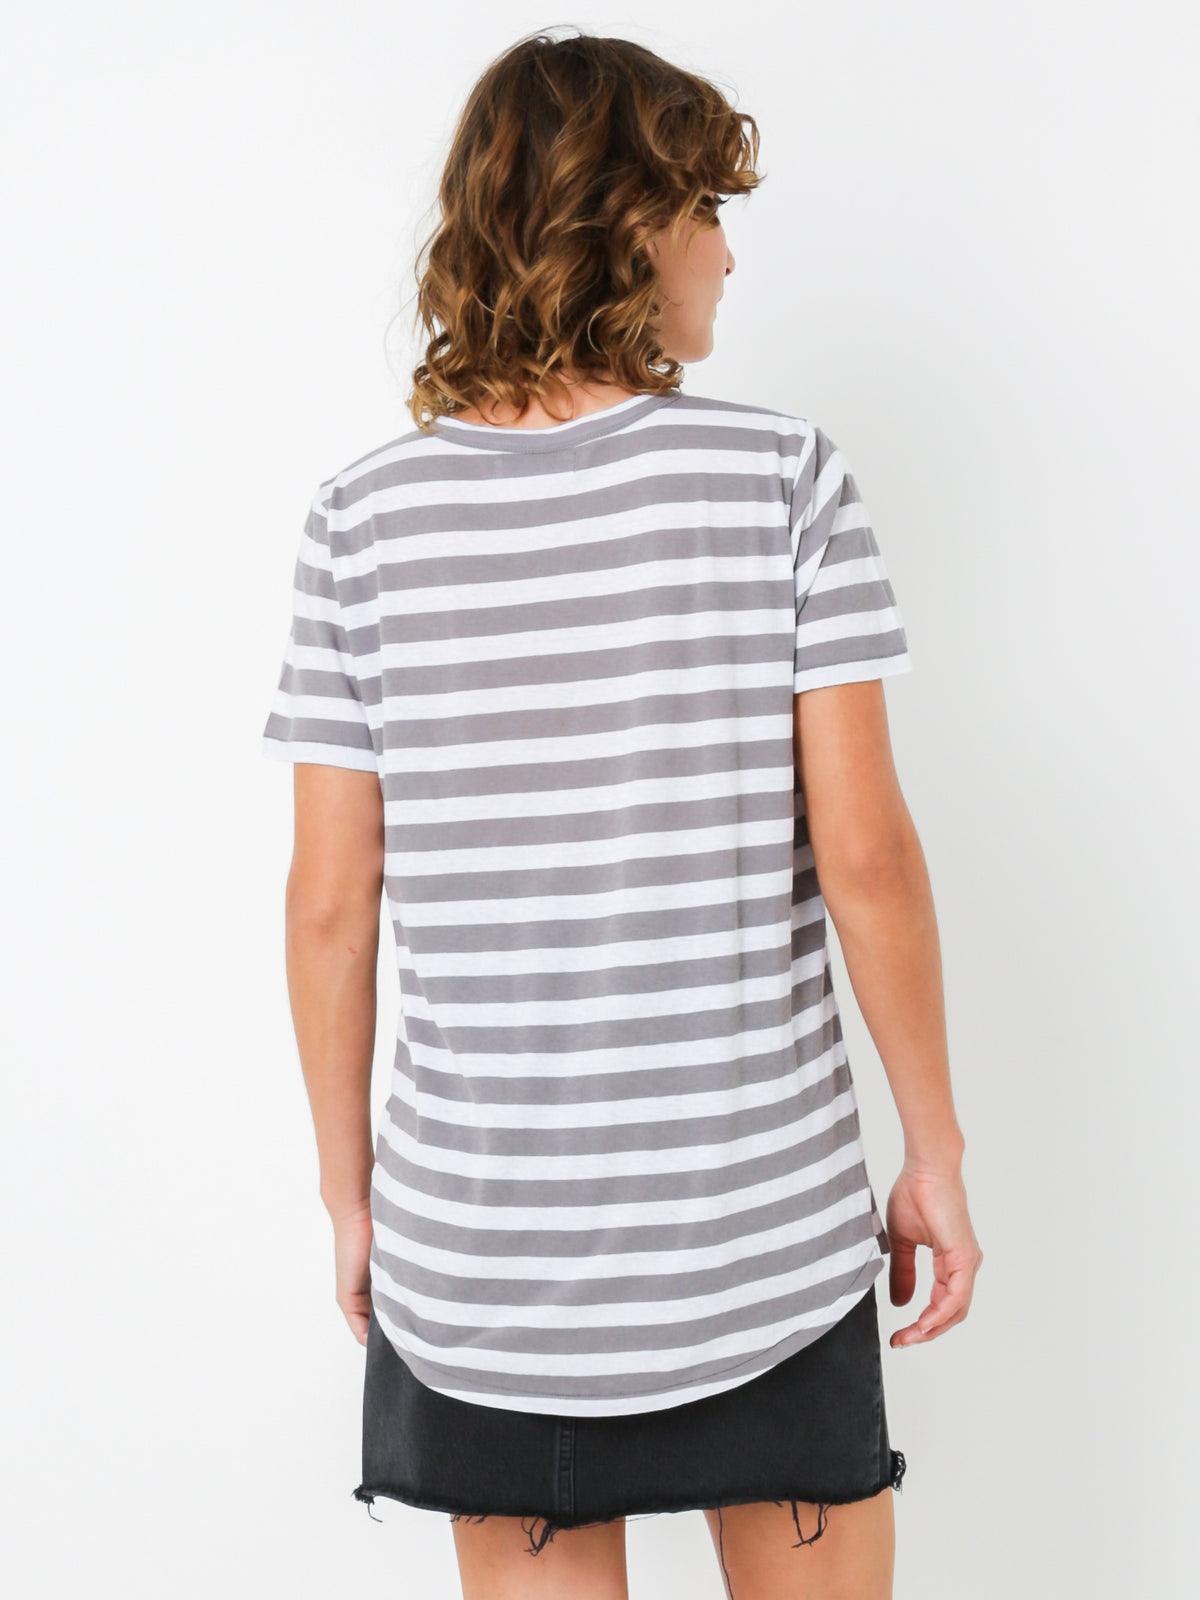 Everyday T-Shirt in Steel &amp; White Stripe